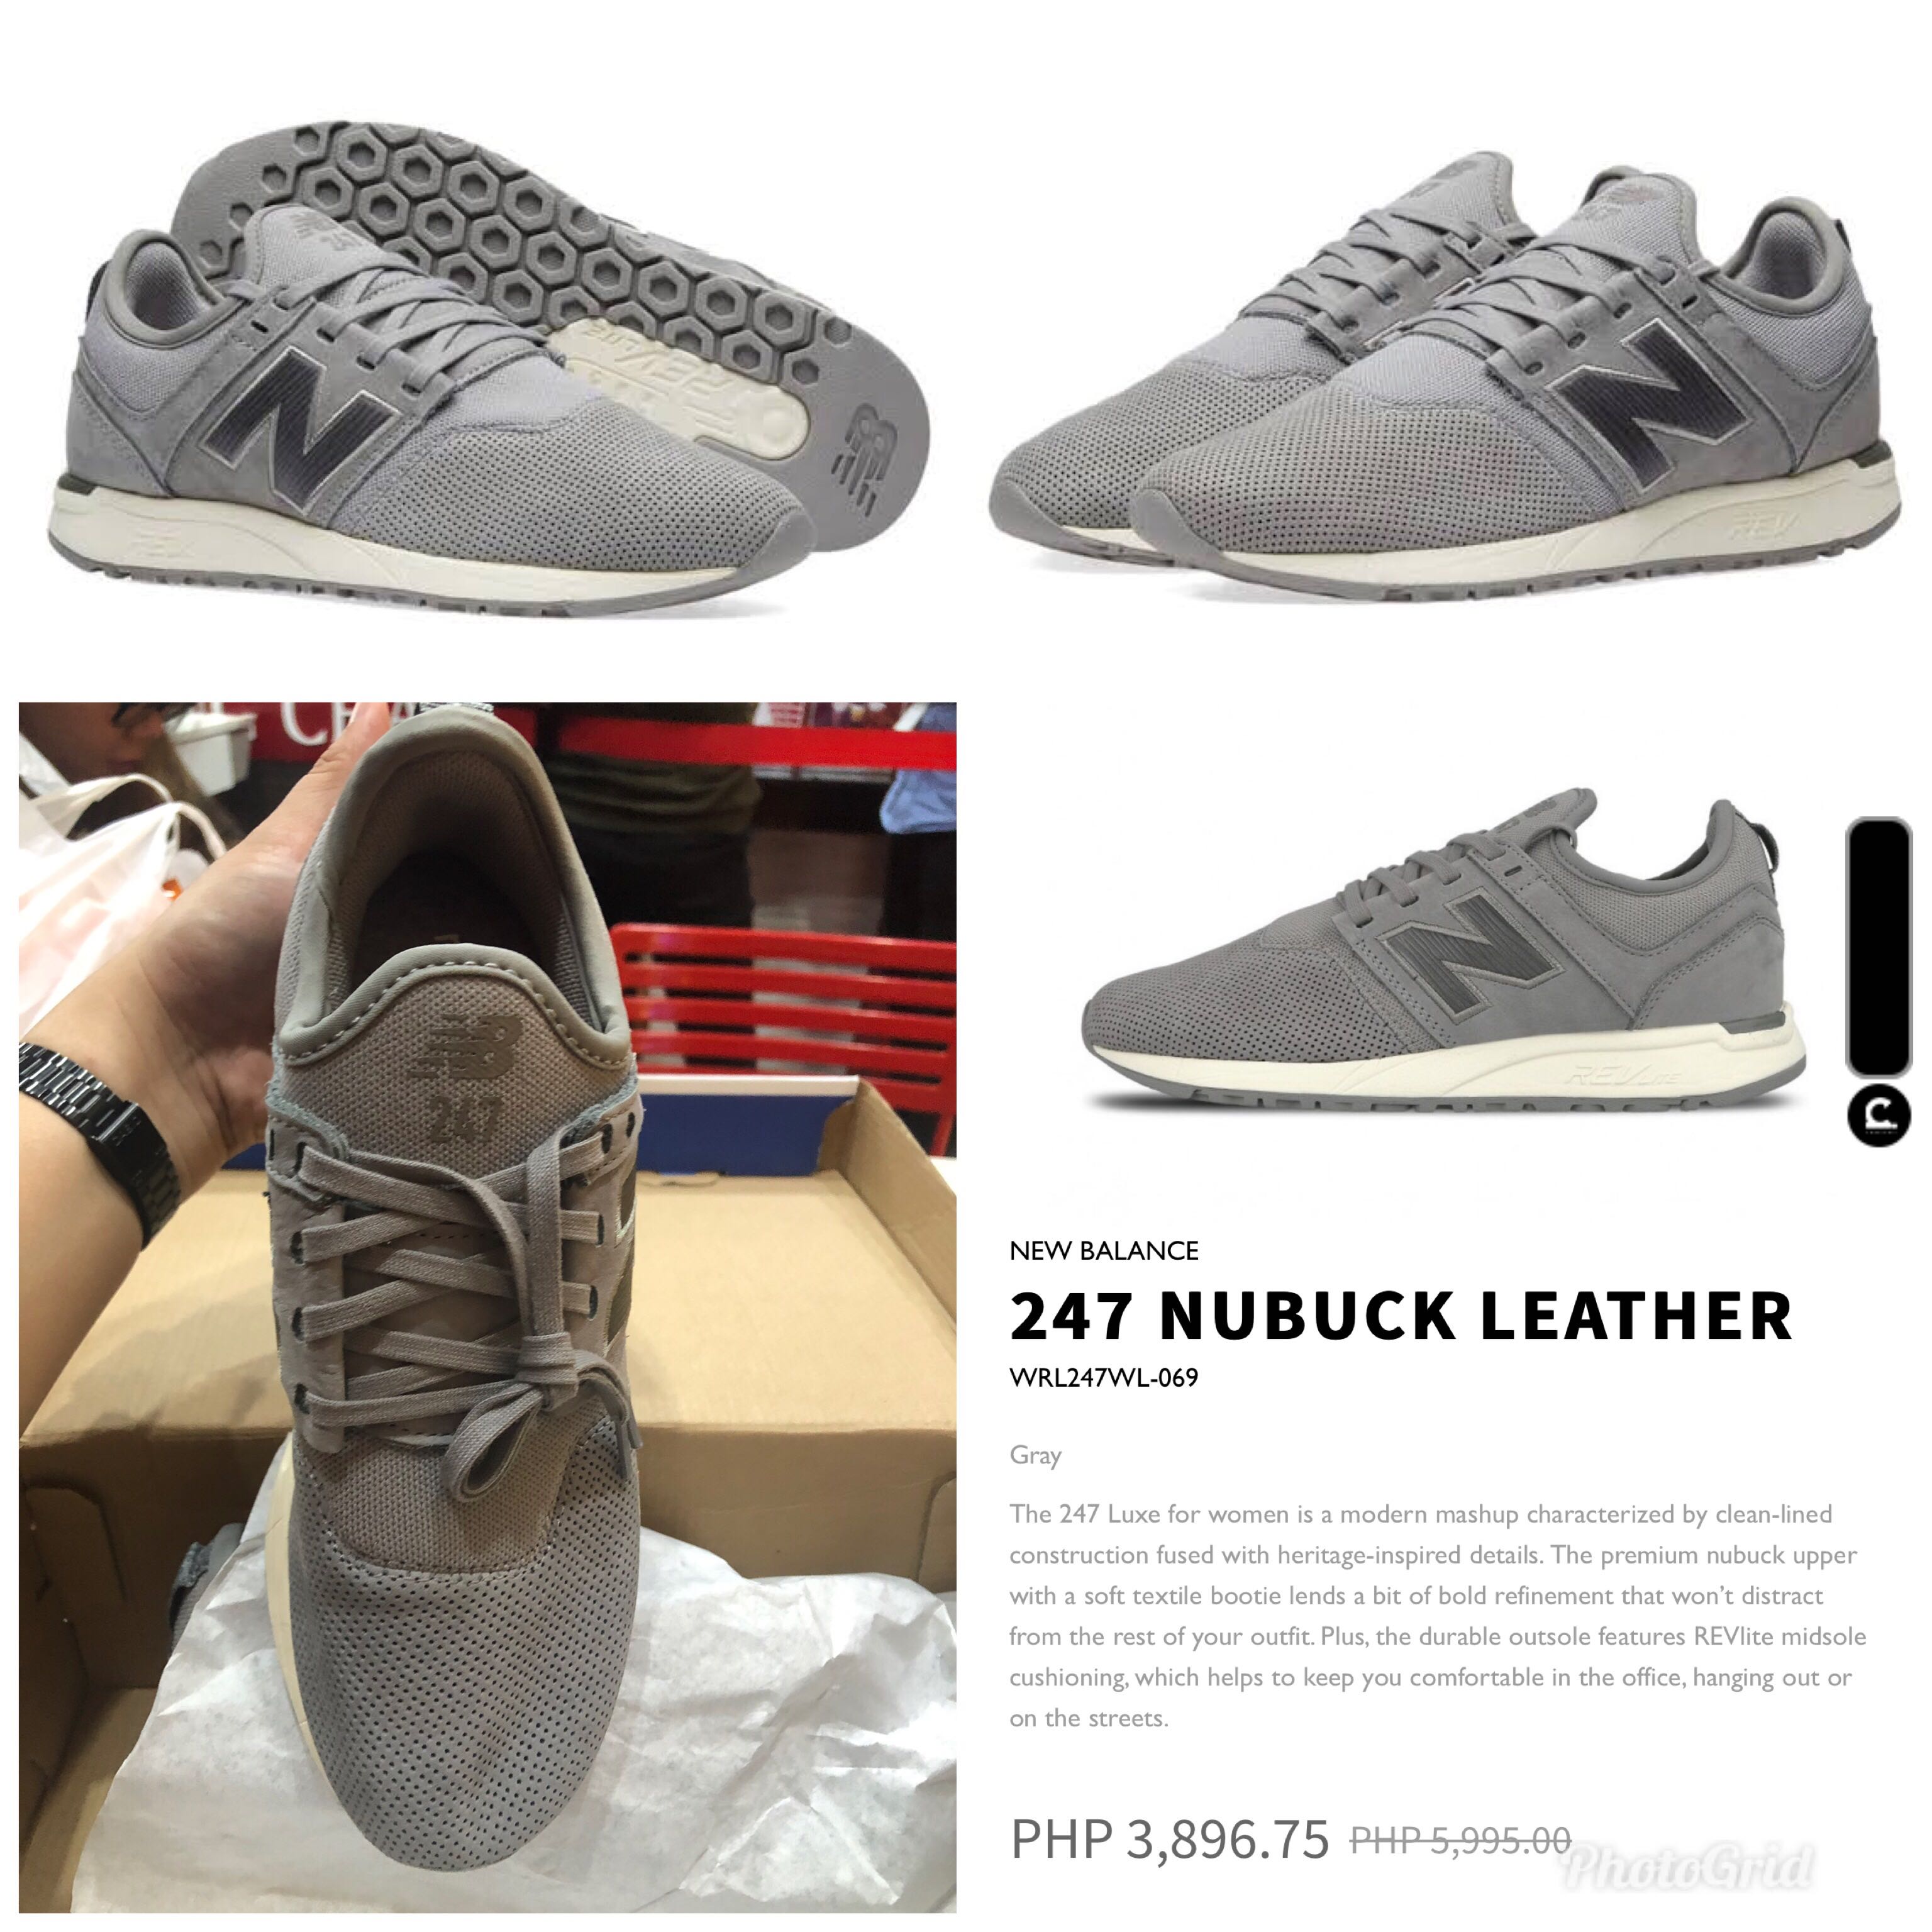 New Balance 247 Nubuck Leather in Grey 